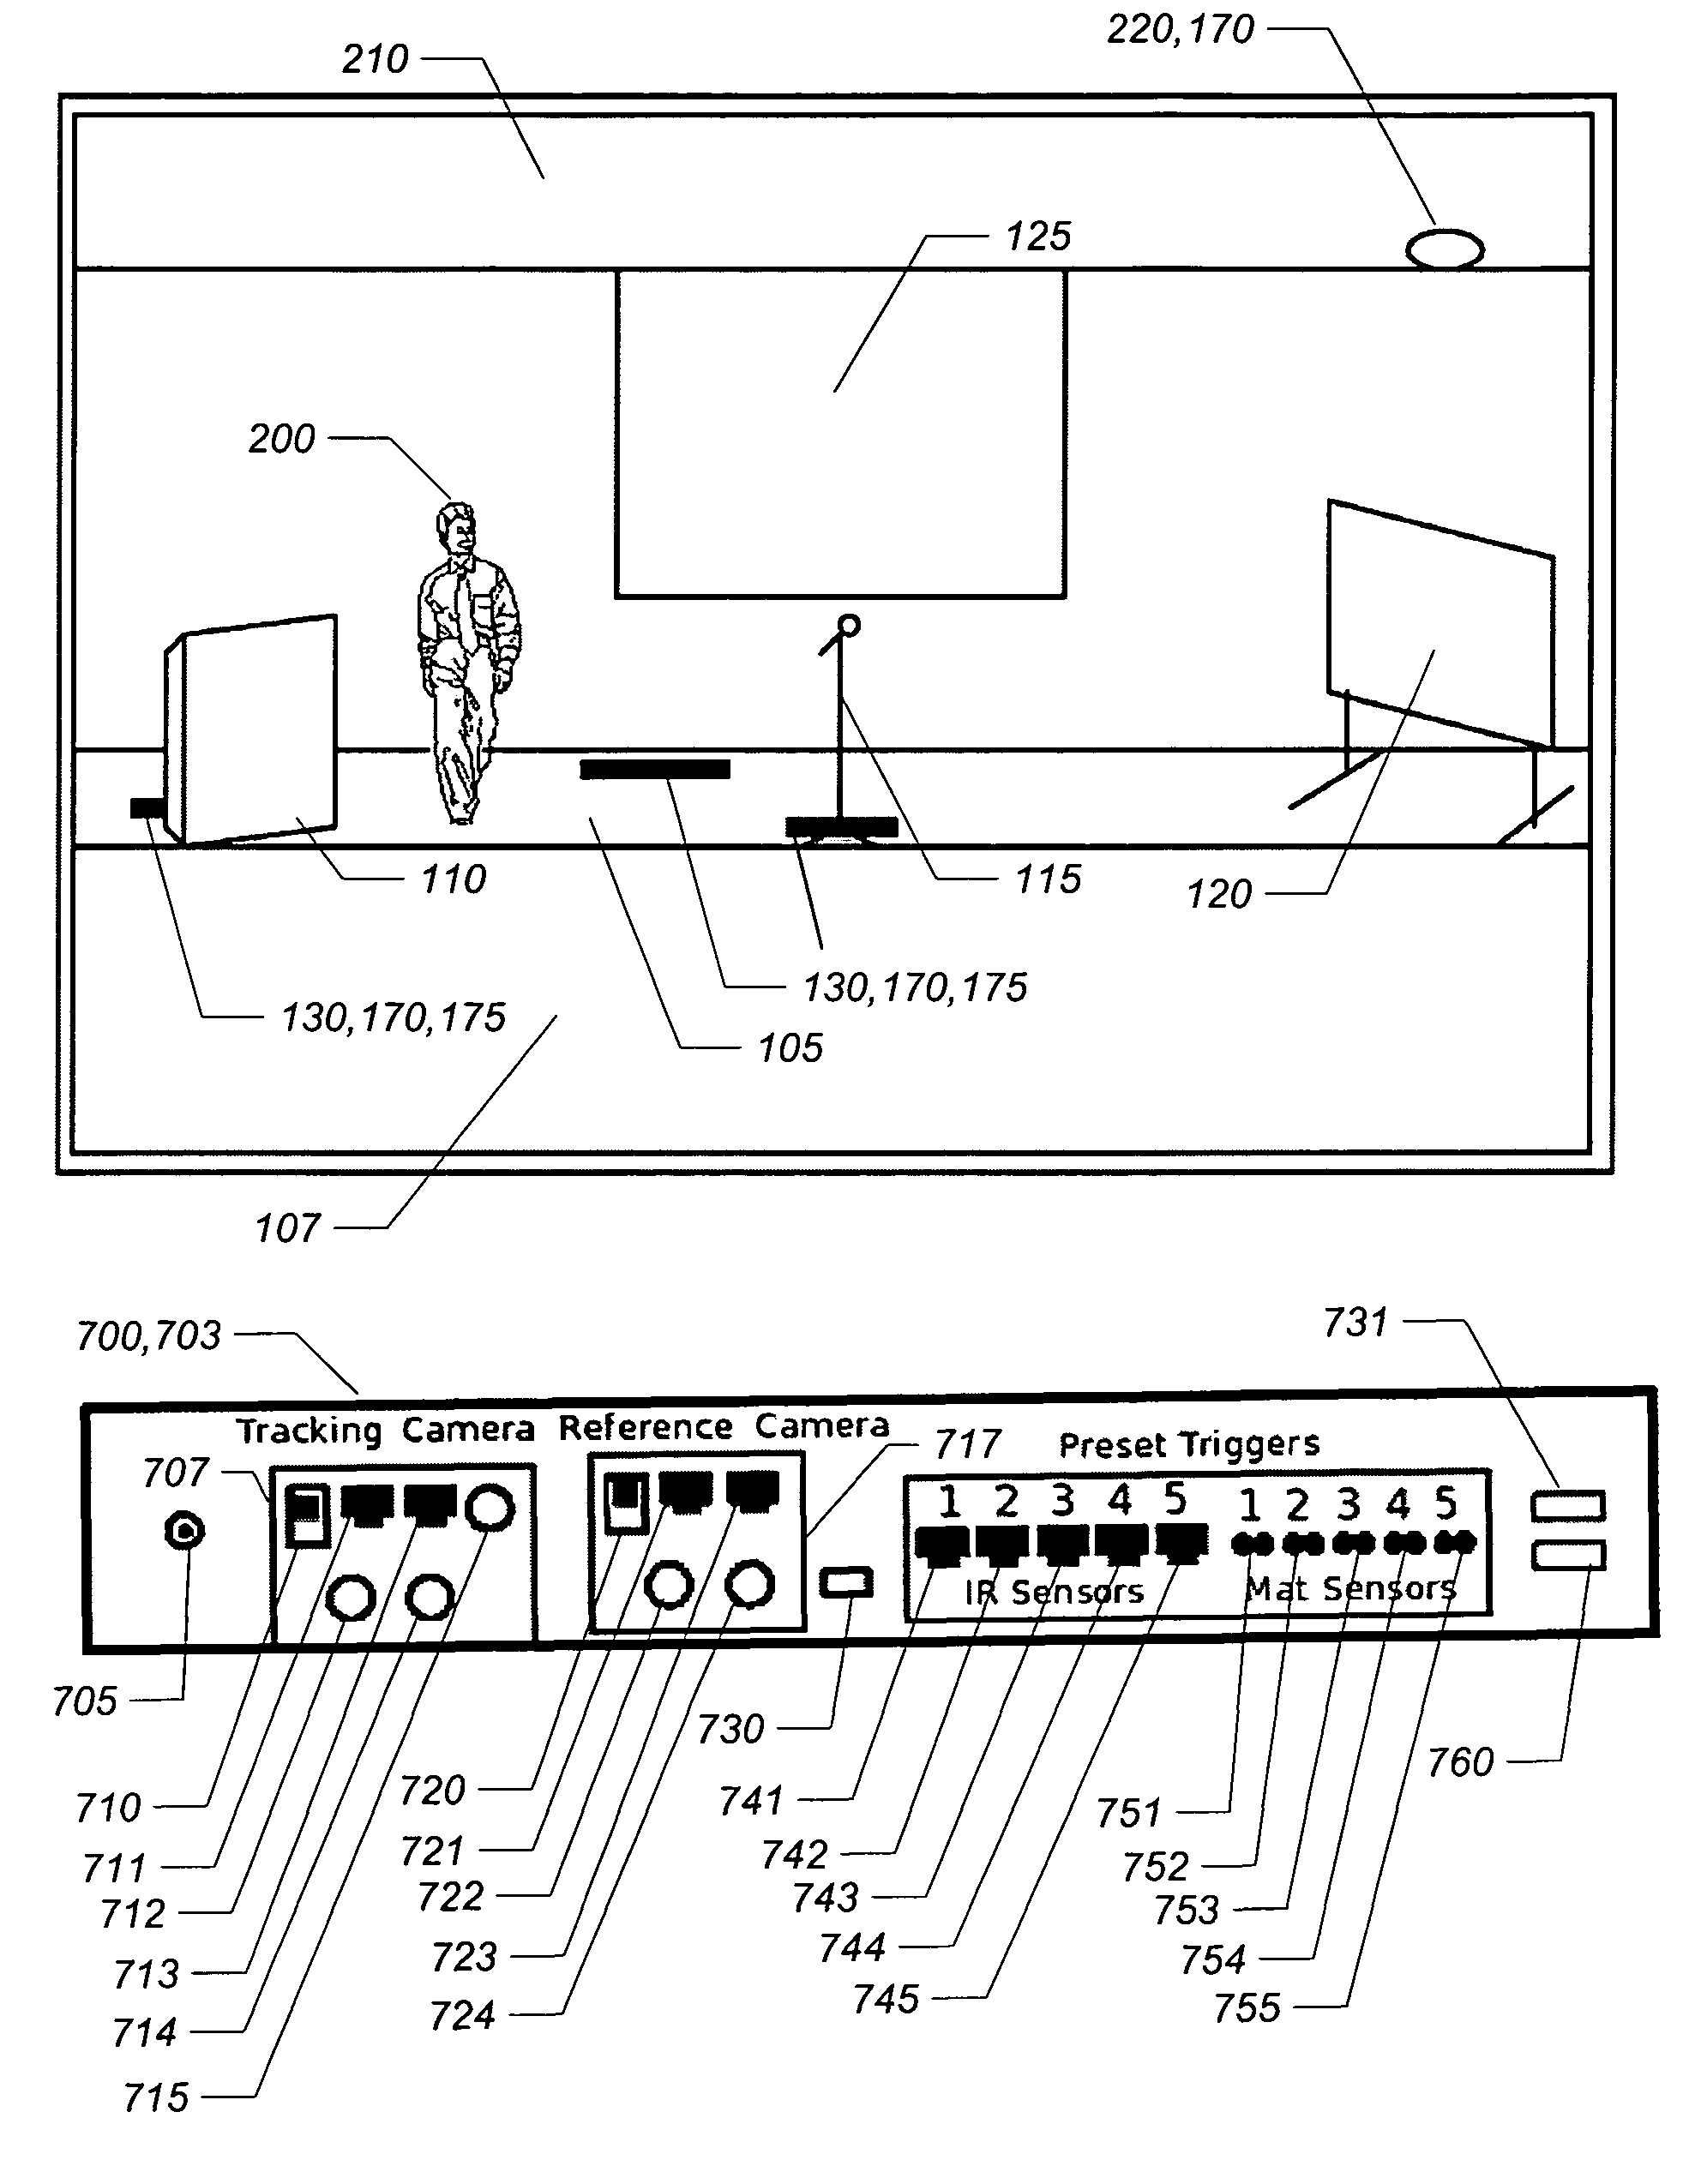 Presentation video control system